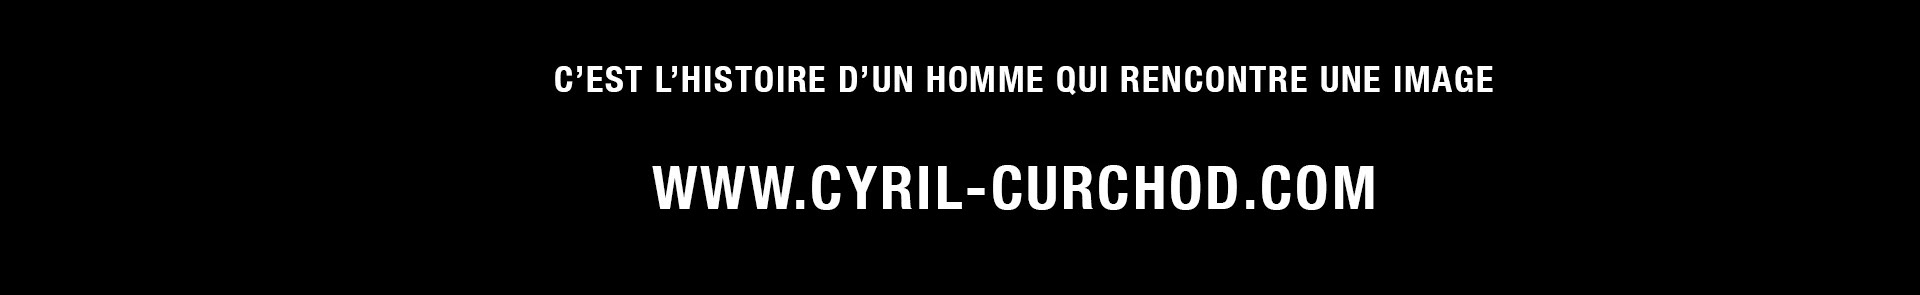 Cyril Curchod's profile banner